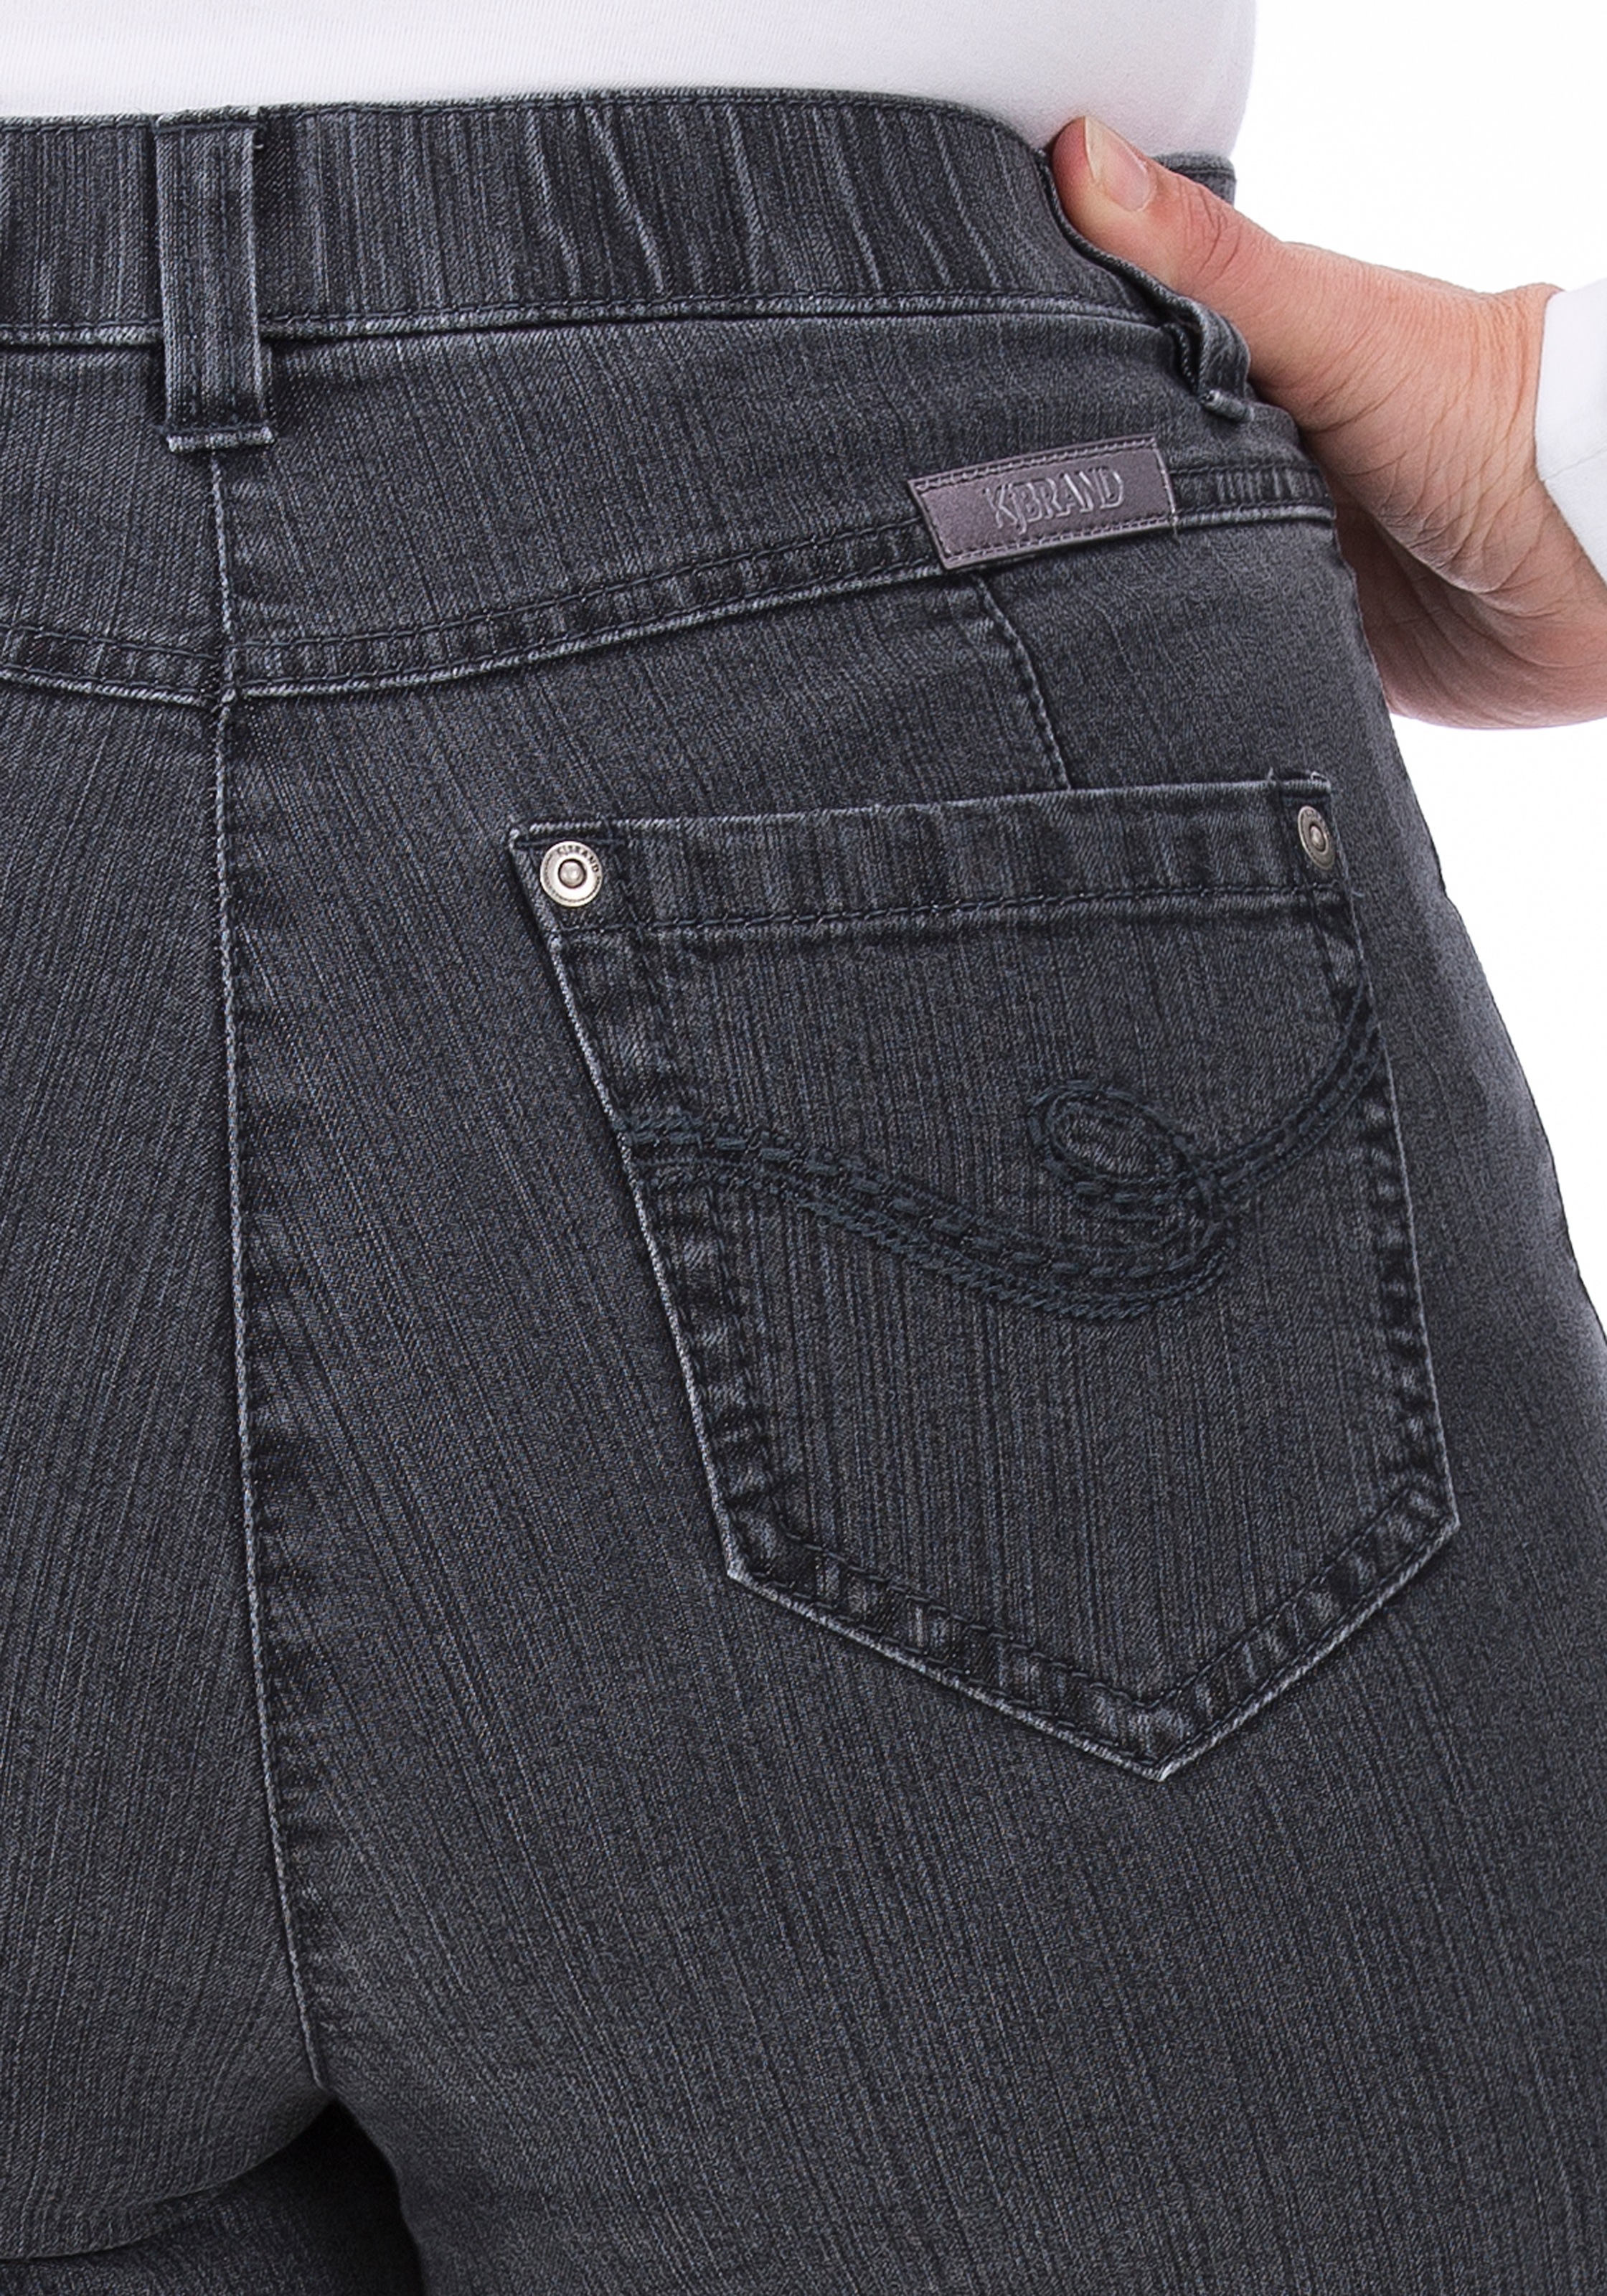 KjBRAND Stretch-Jeans »Betty Denim Online Shop Stretch« im OTTO